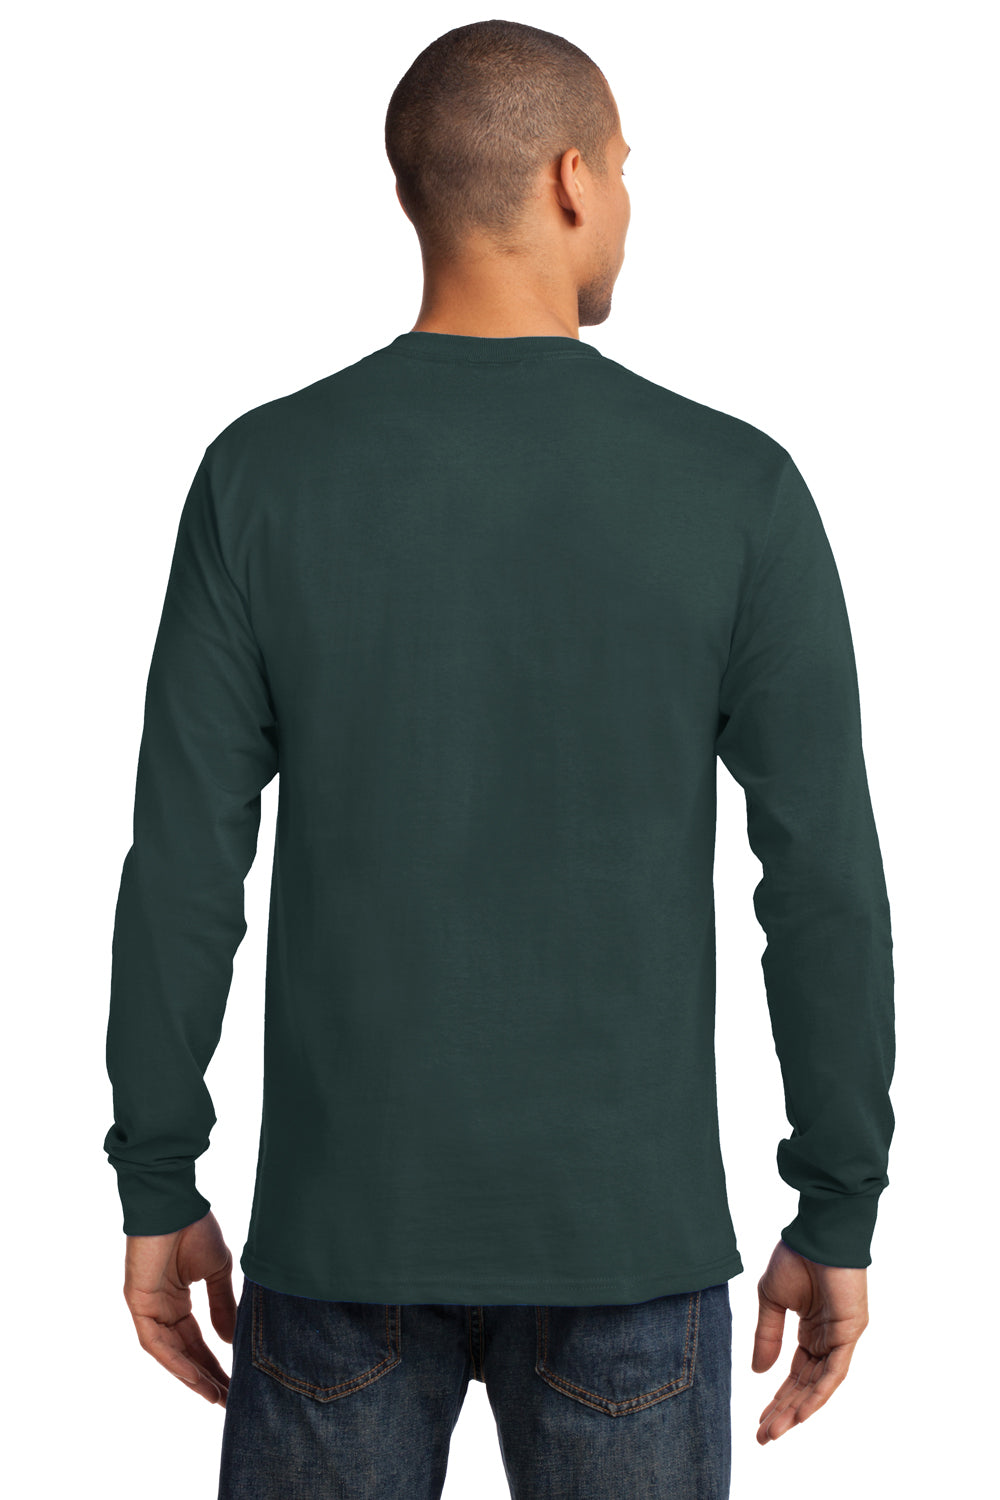 Port & Company PC61LS Mens Essential Long Sleeve Crewneck T-Shirt Dark Green Back